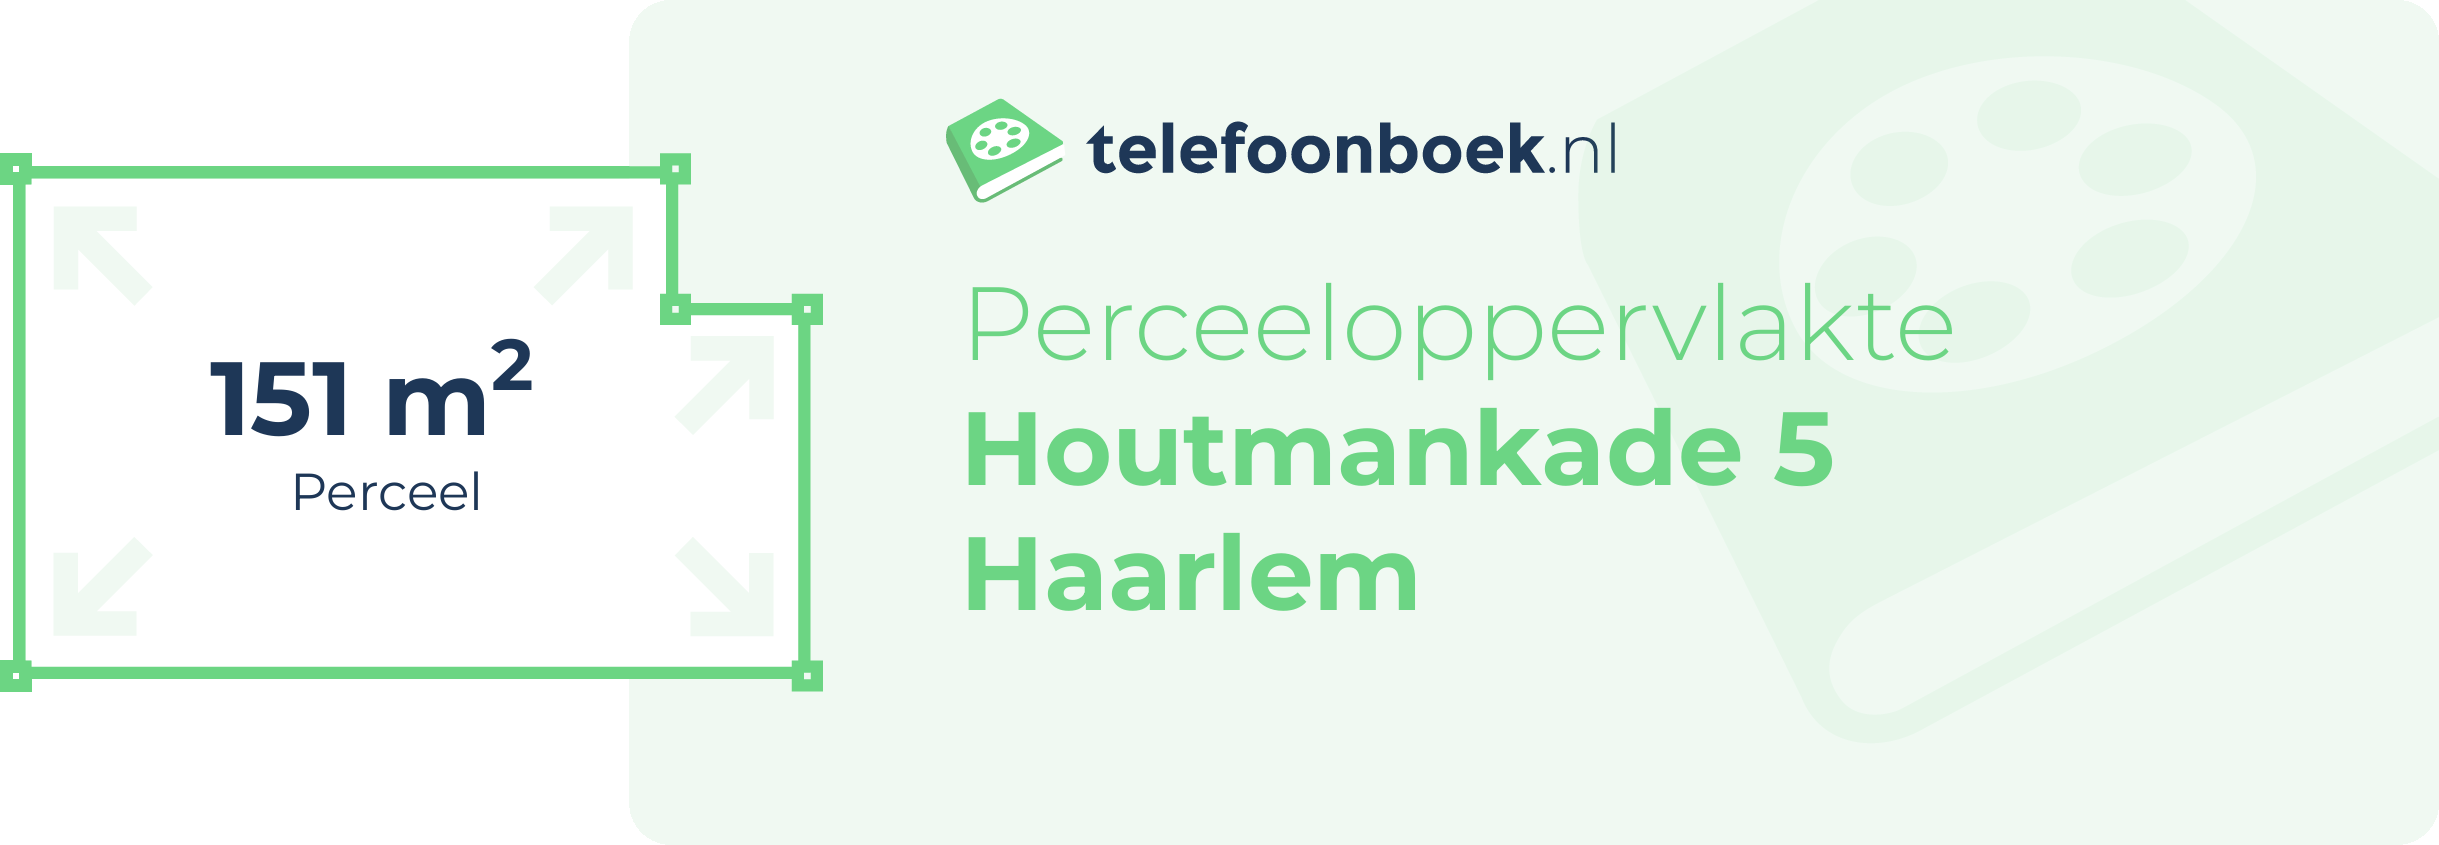 Perceeloppervlakte Houtmankade 5 Haarlem